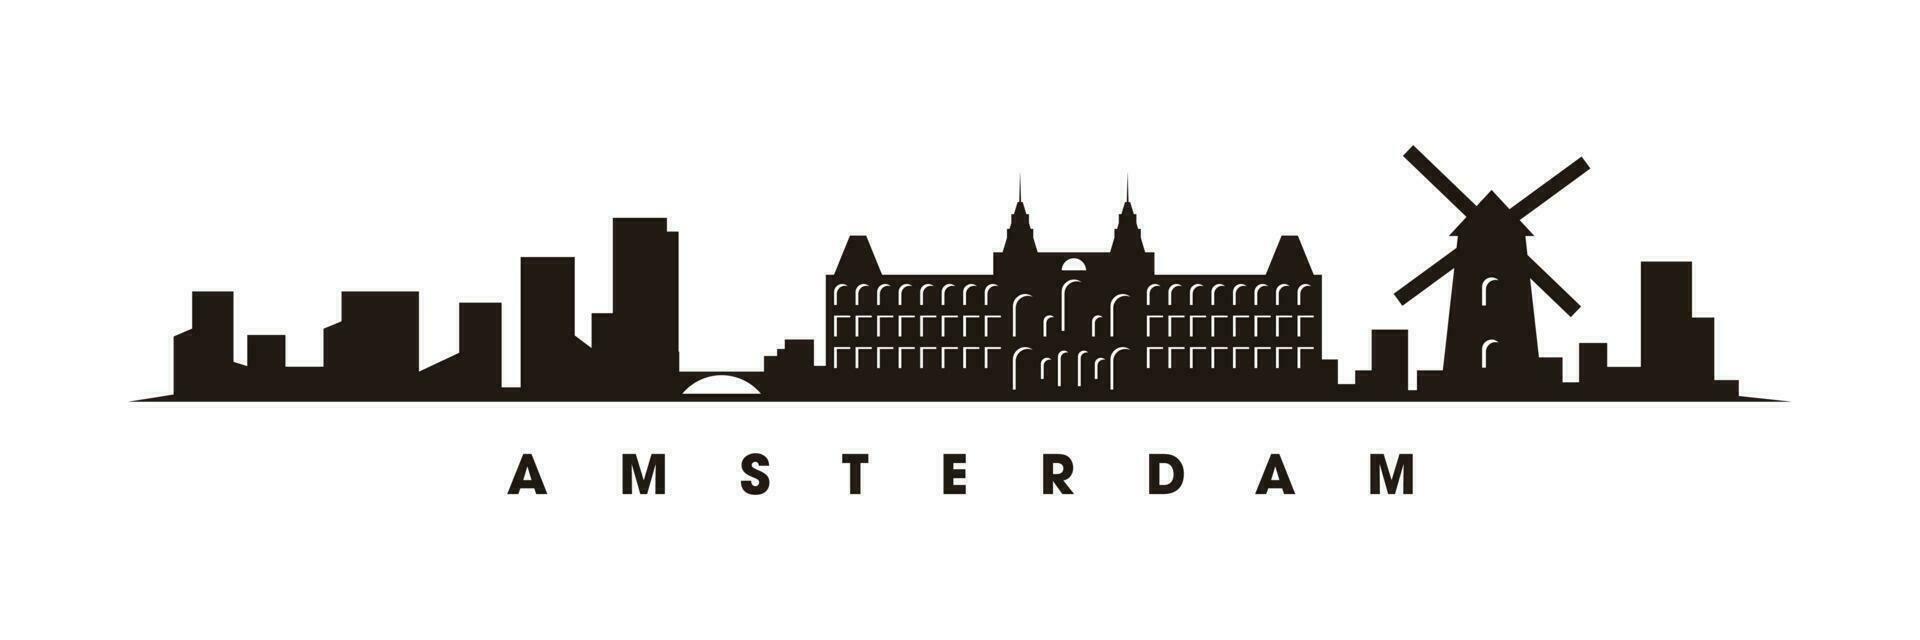 Amsterdam skyline and landmarks silhouette vector